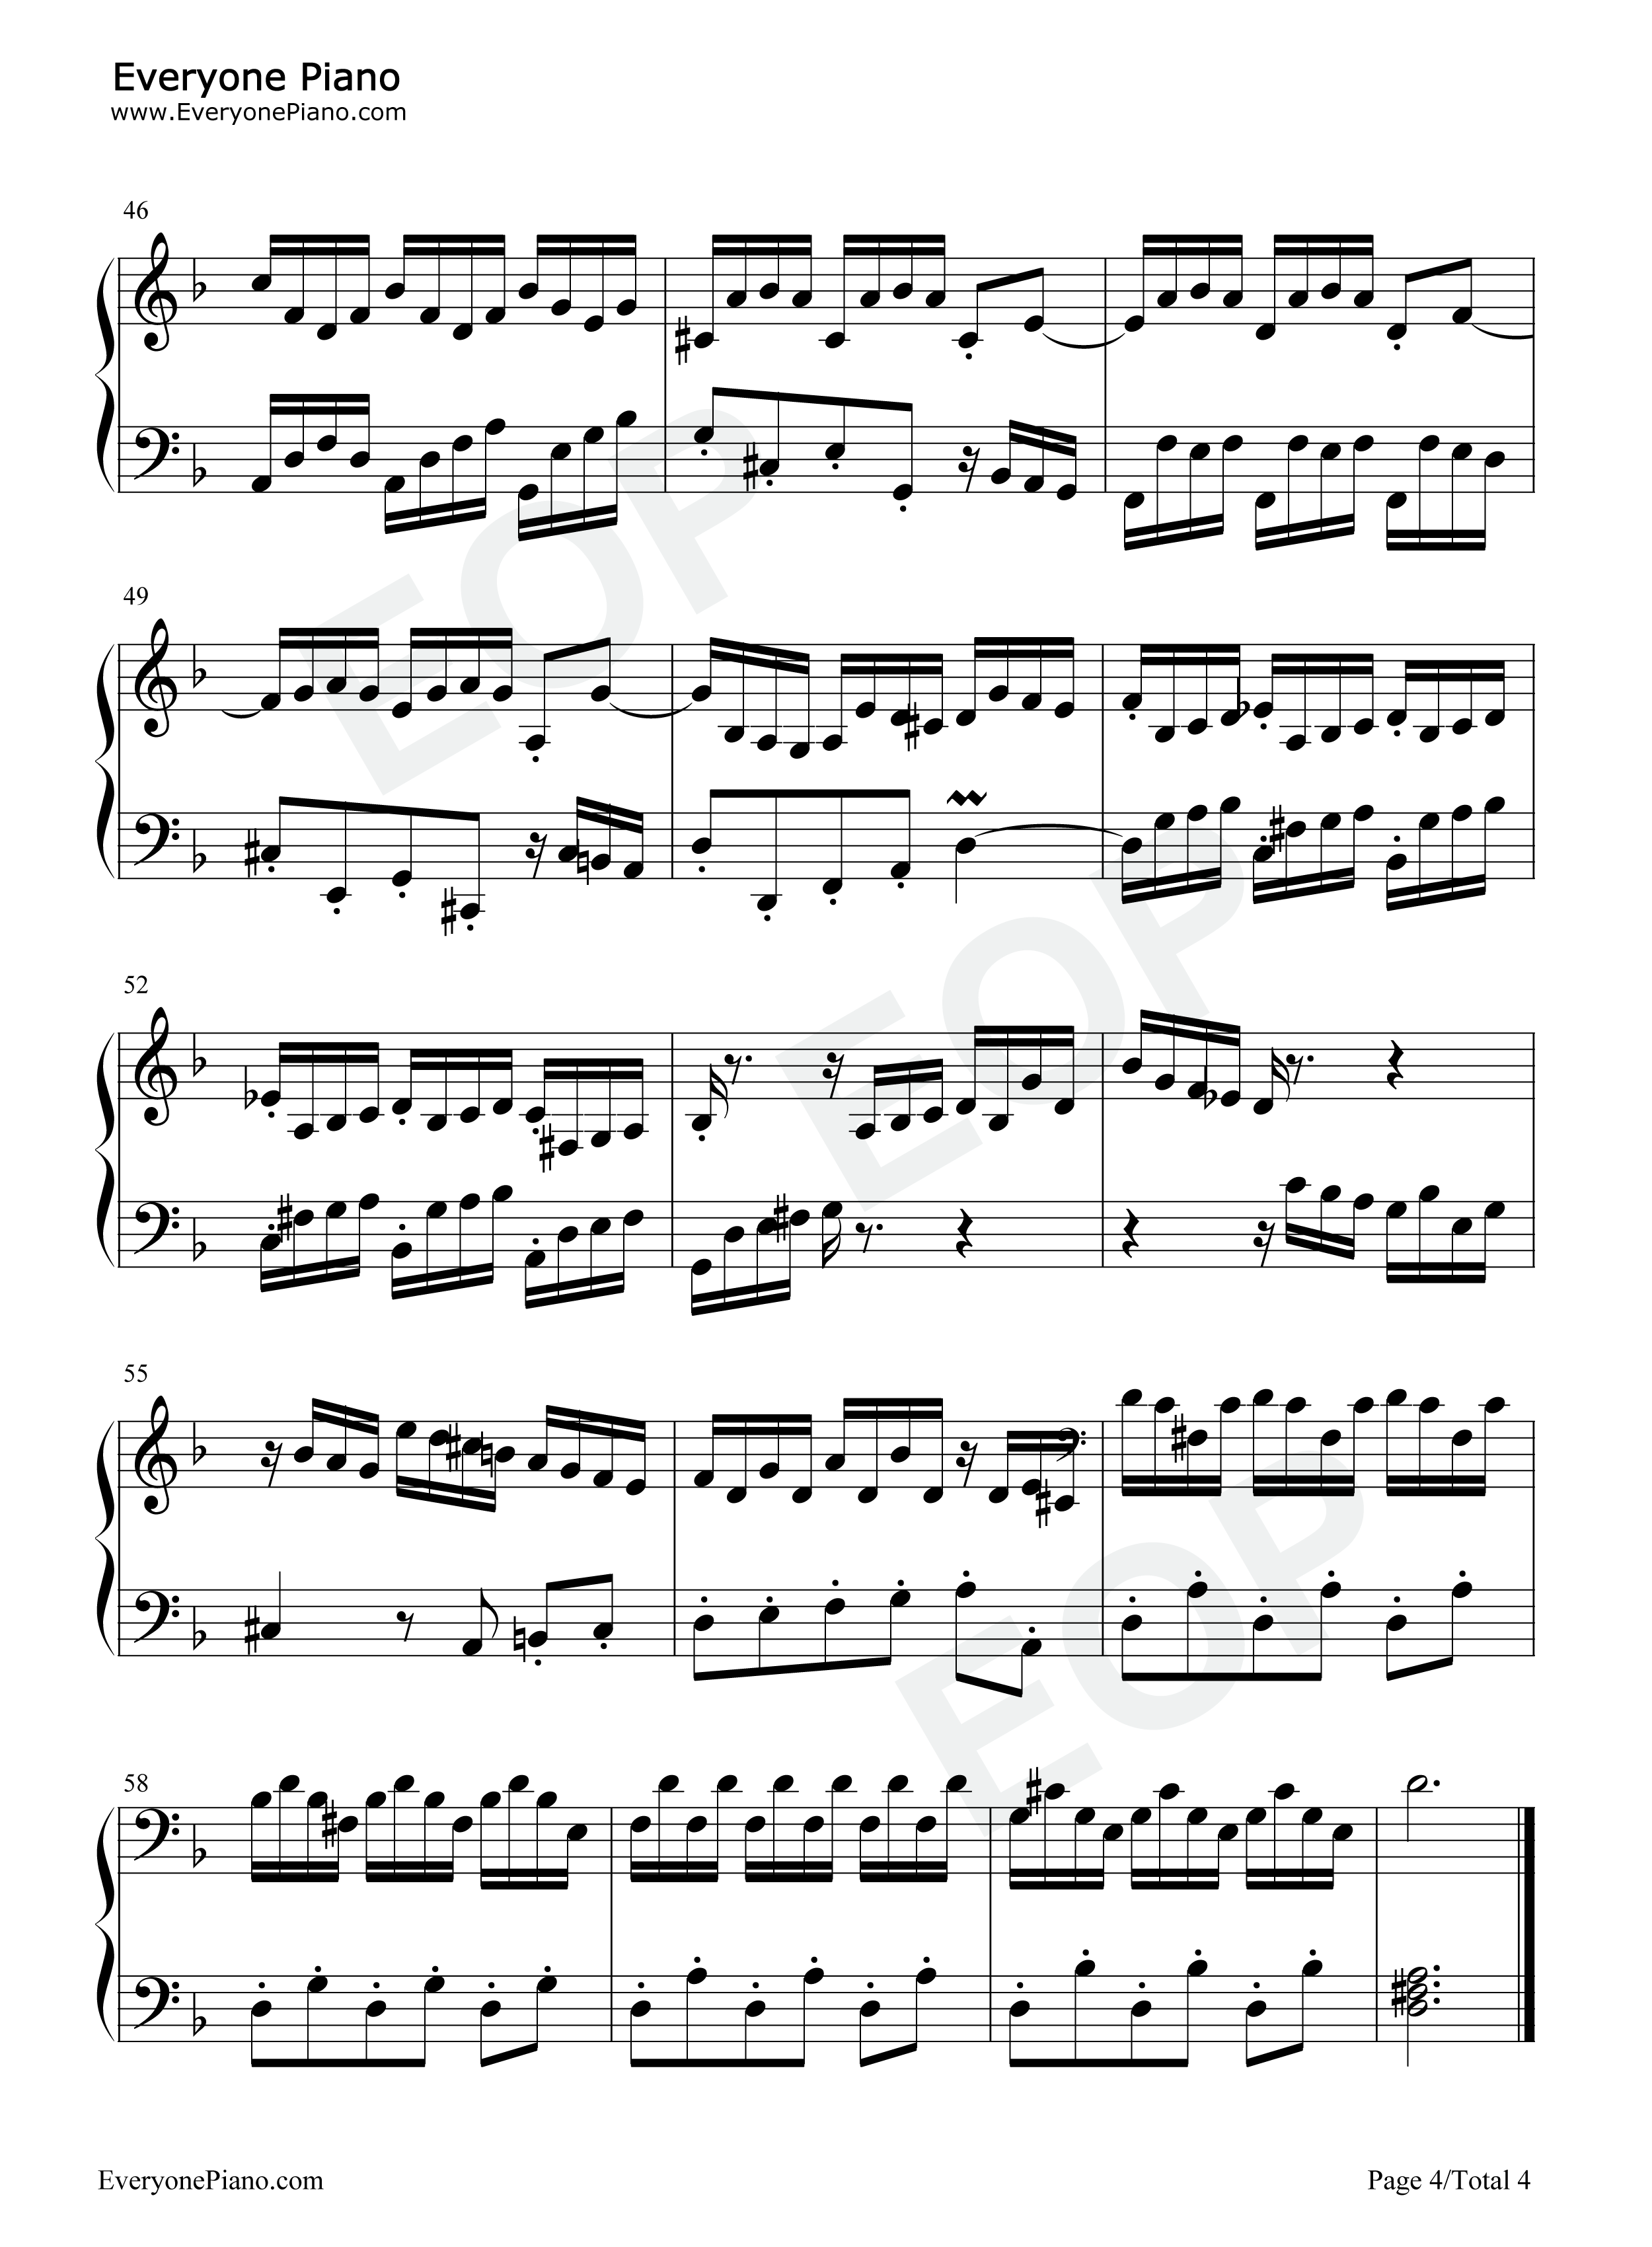 BWV_875钢琴谱_巴赫